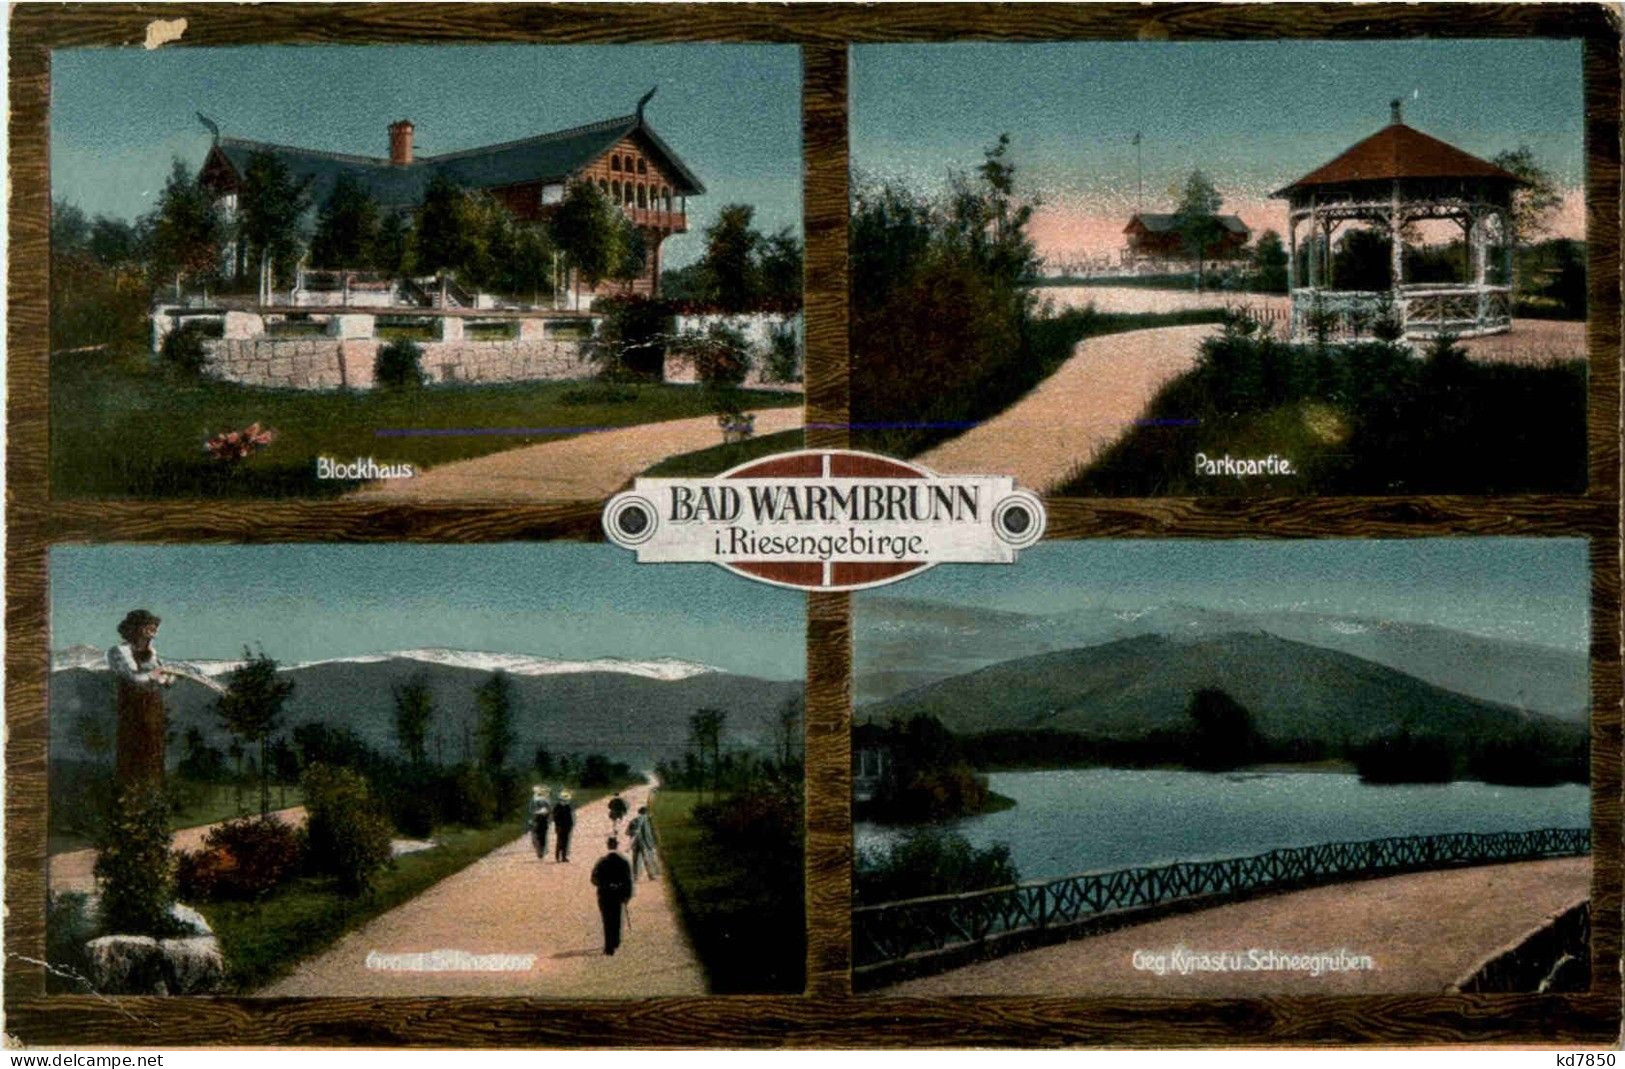 Bad Warmbrunn - Poland